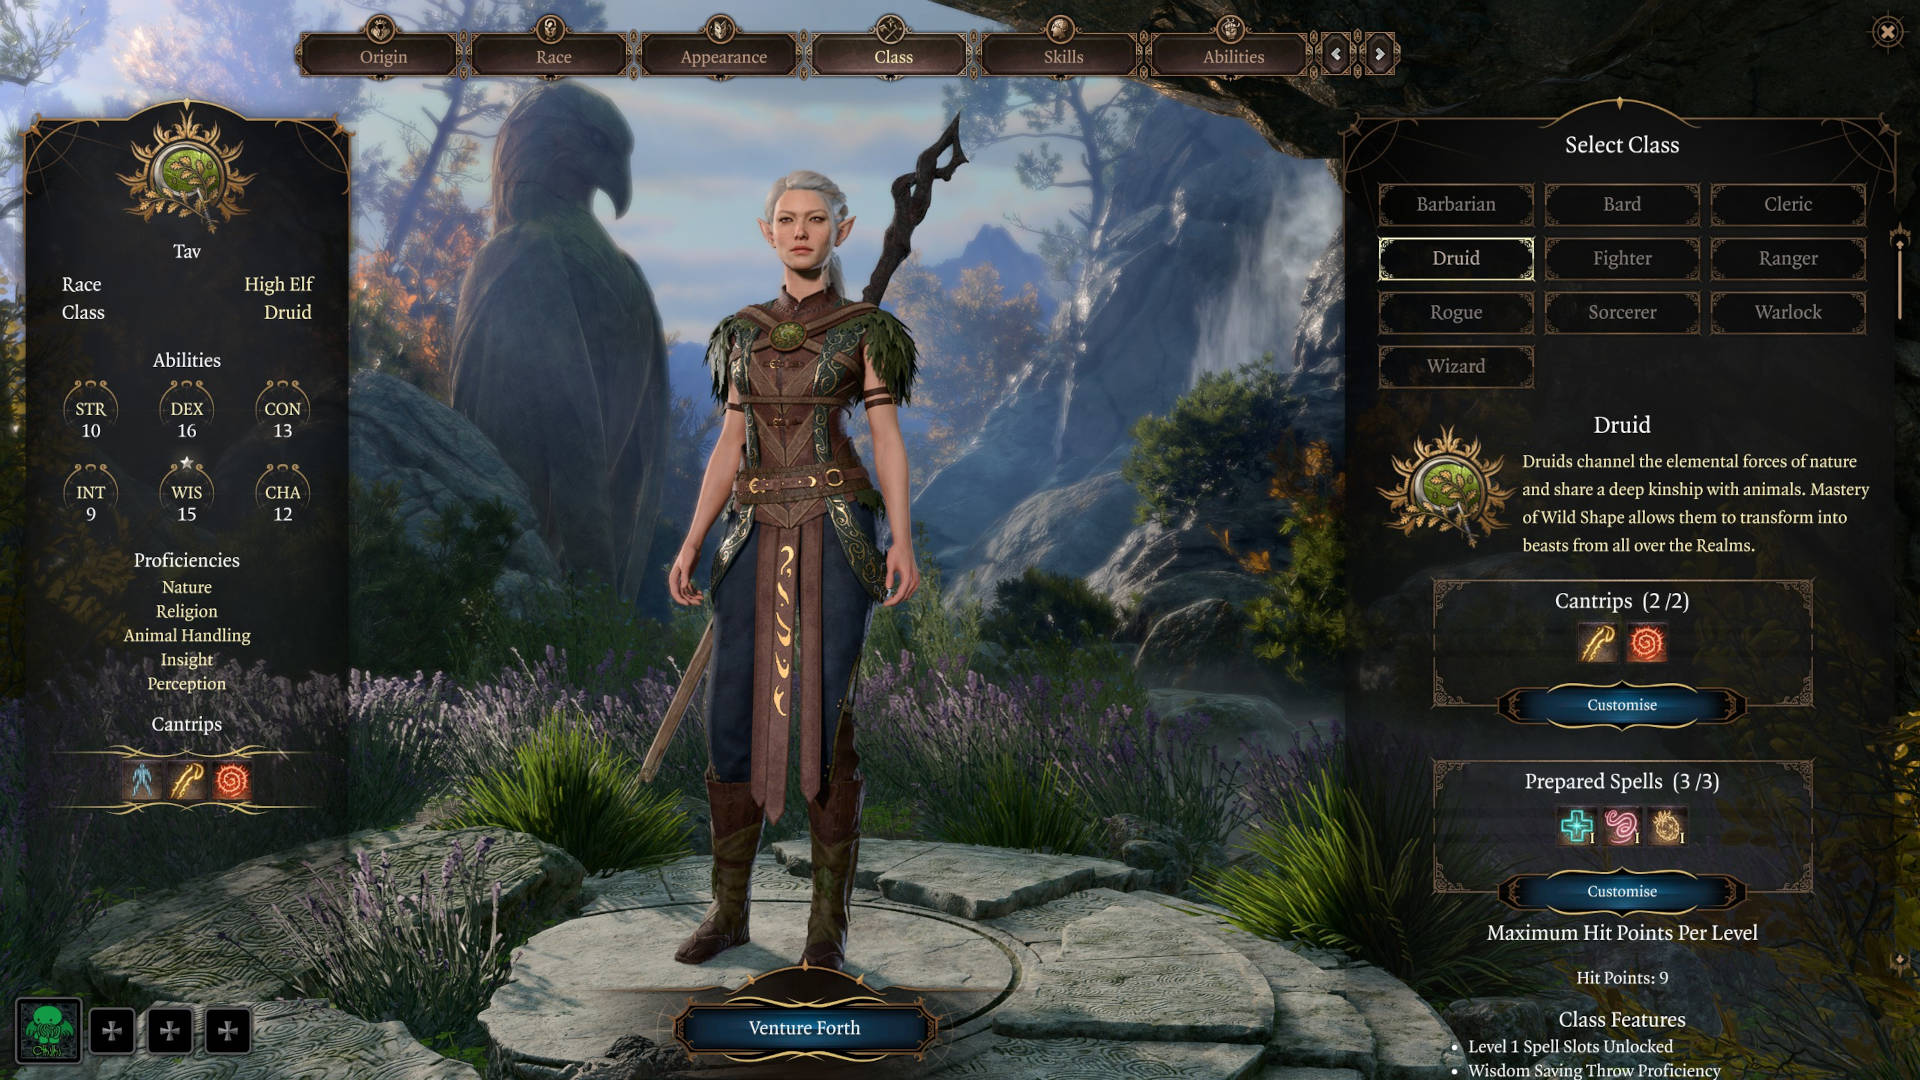 Baldur's Gate 3 classes: a High-Elf Druid on the character creation screen.